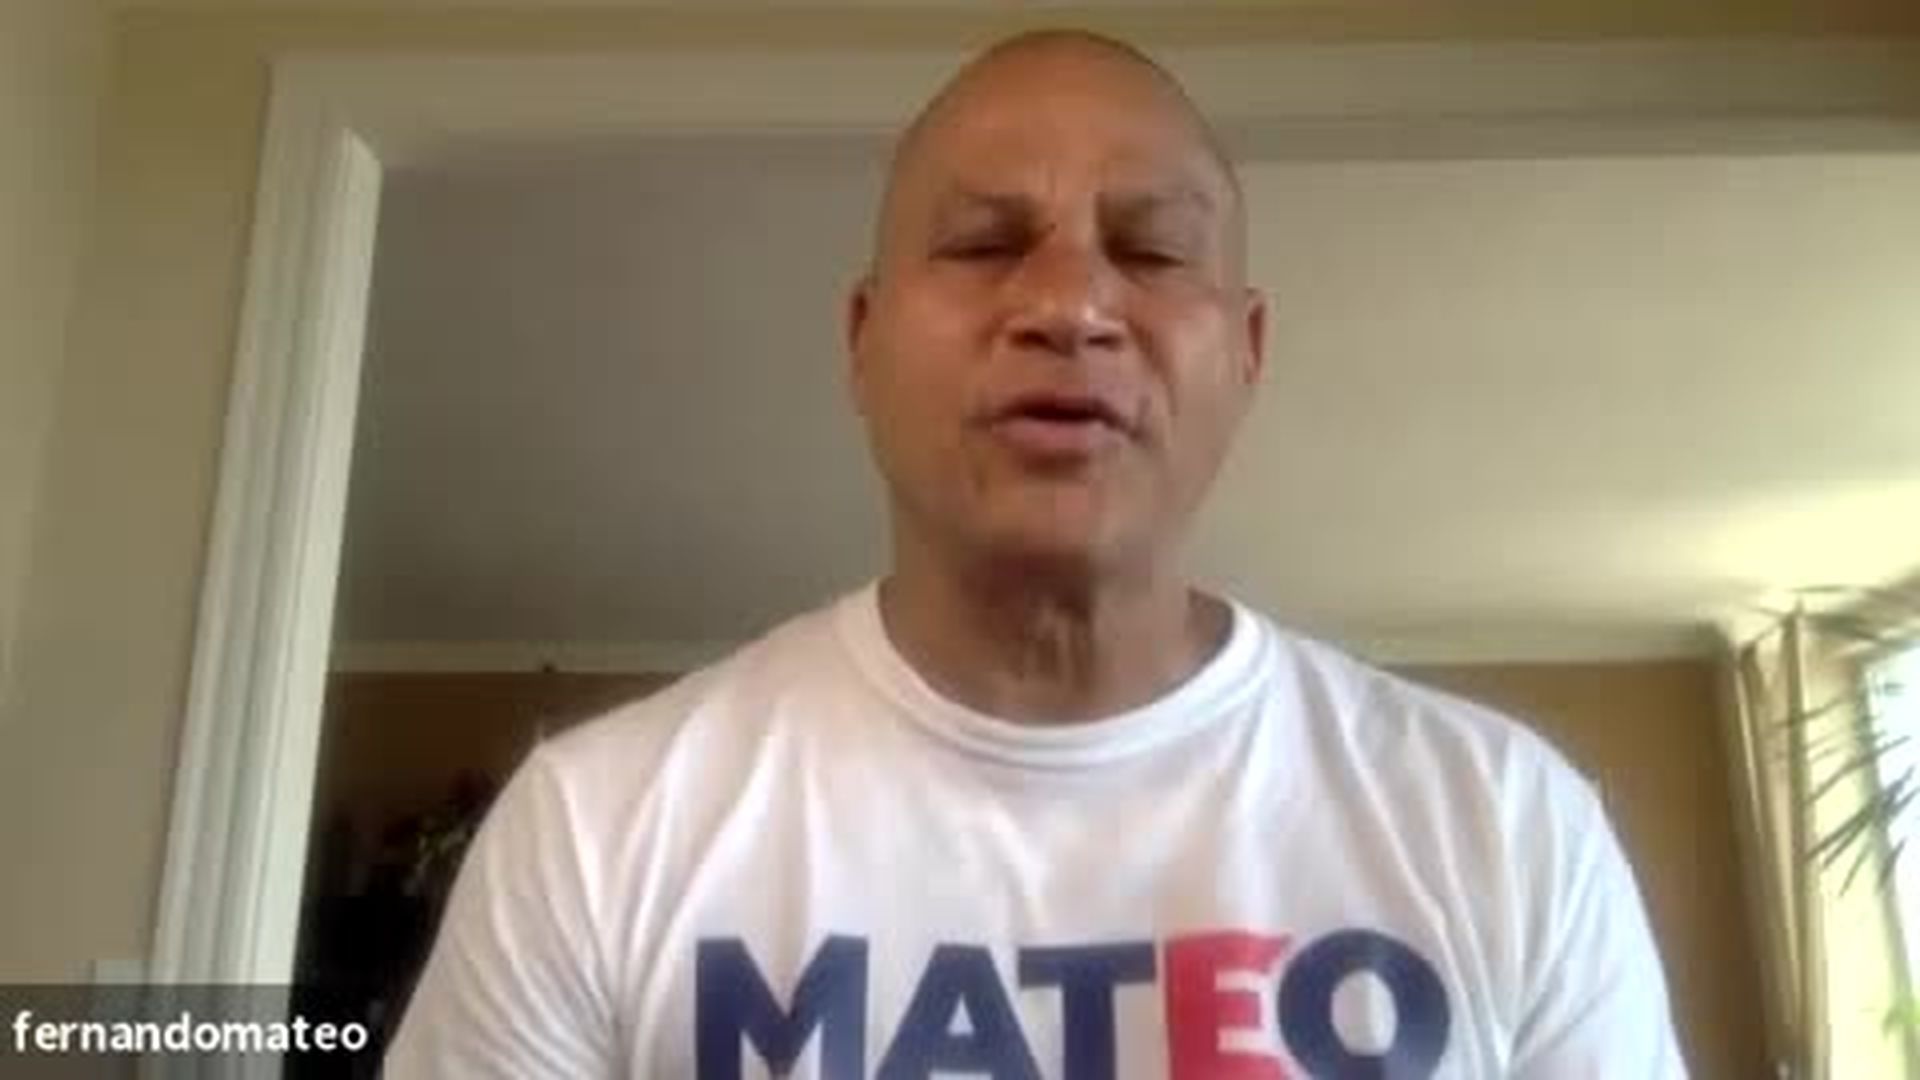 Fernando Mateo | 2021 Republican Candidate for NYC Mayor 